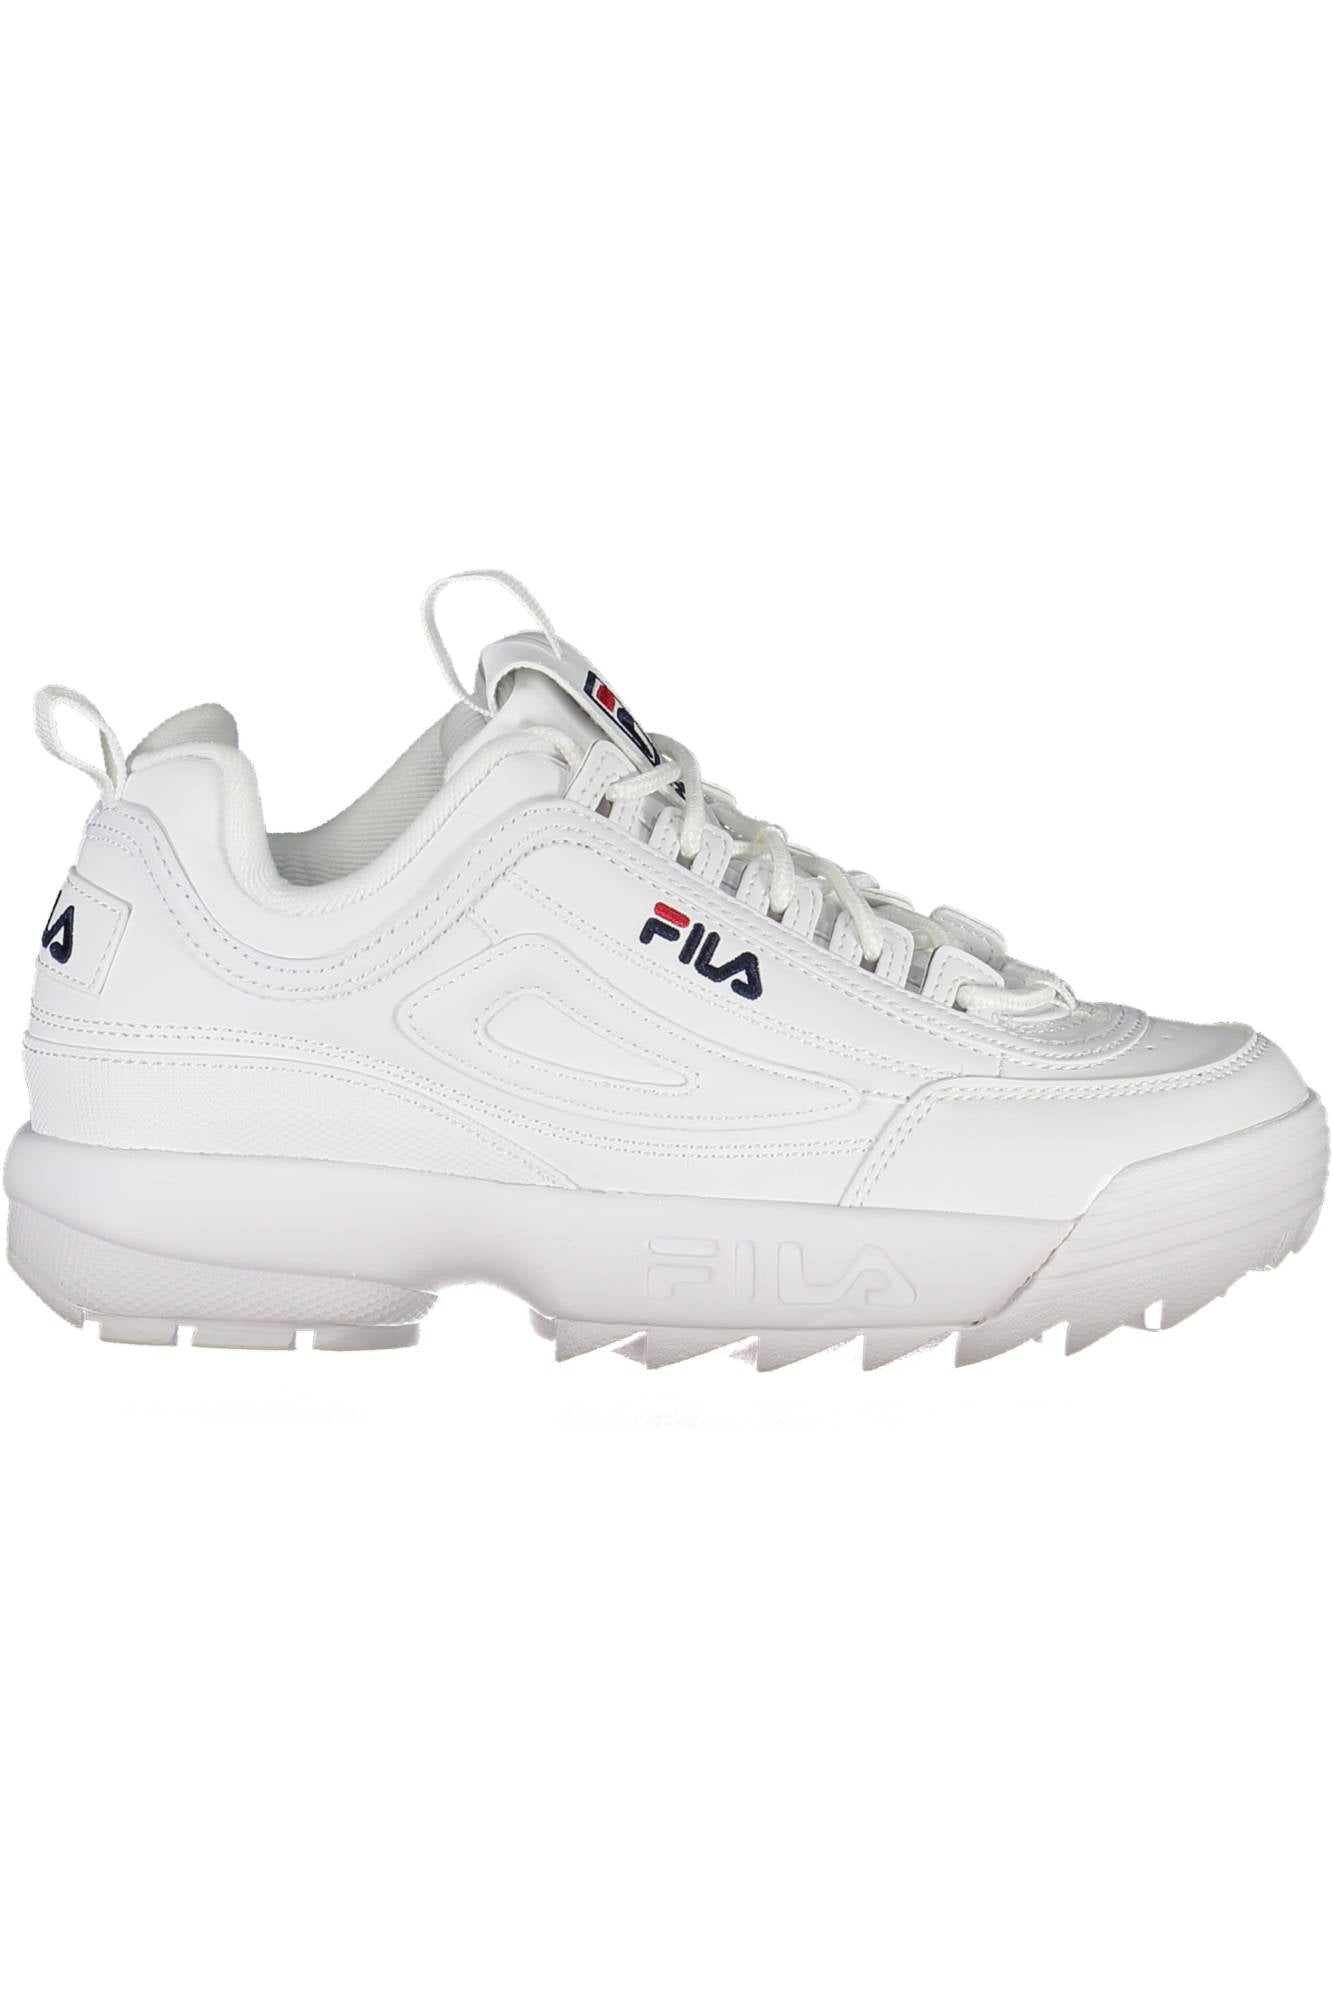 Fila White Sneakers - Fizigo